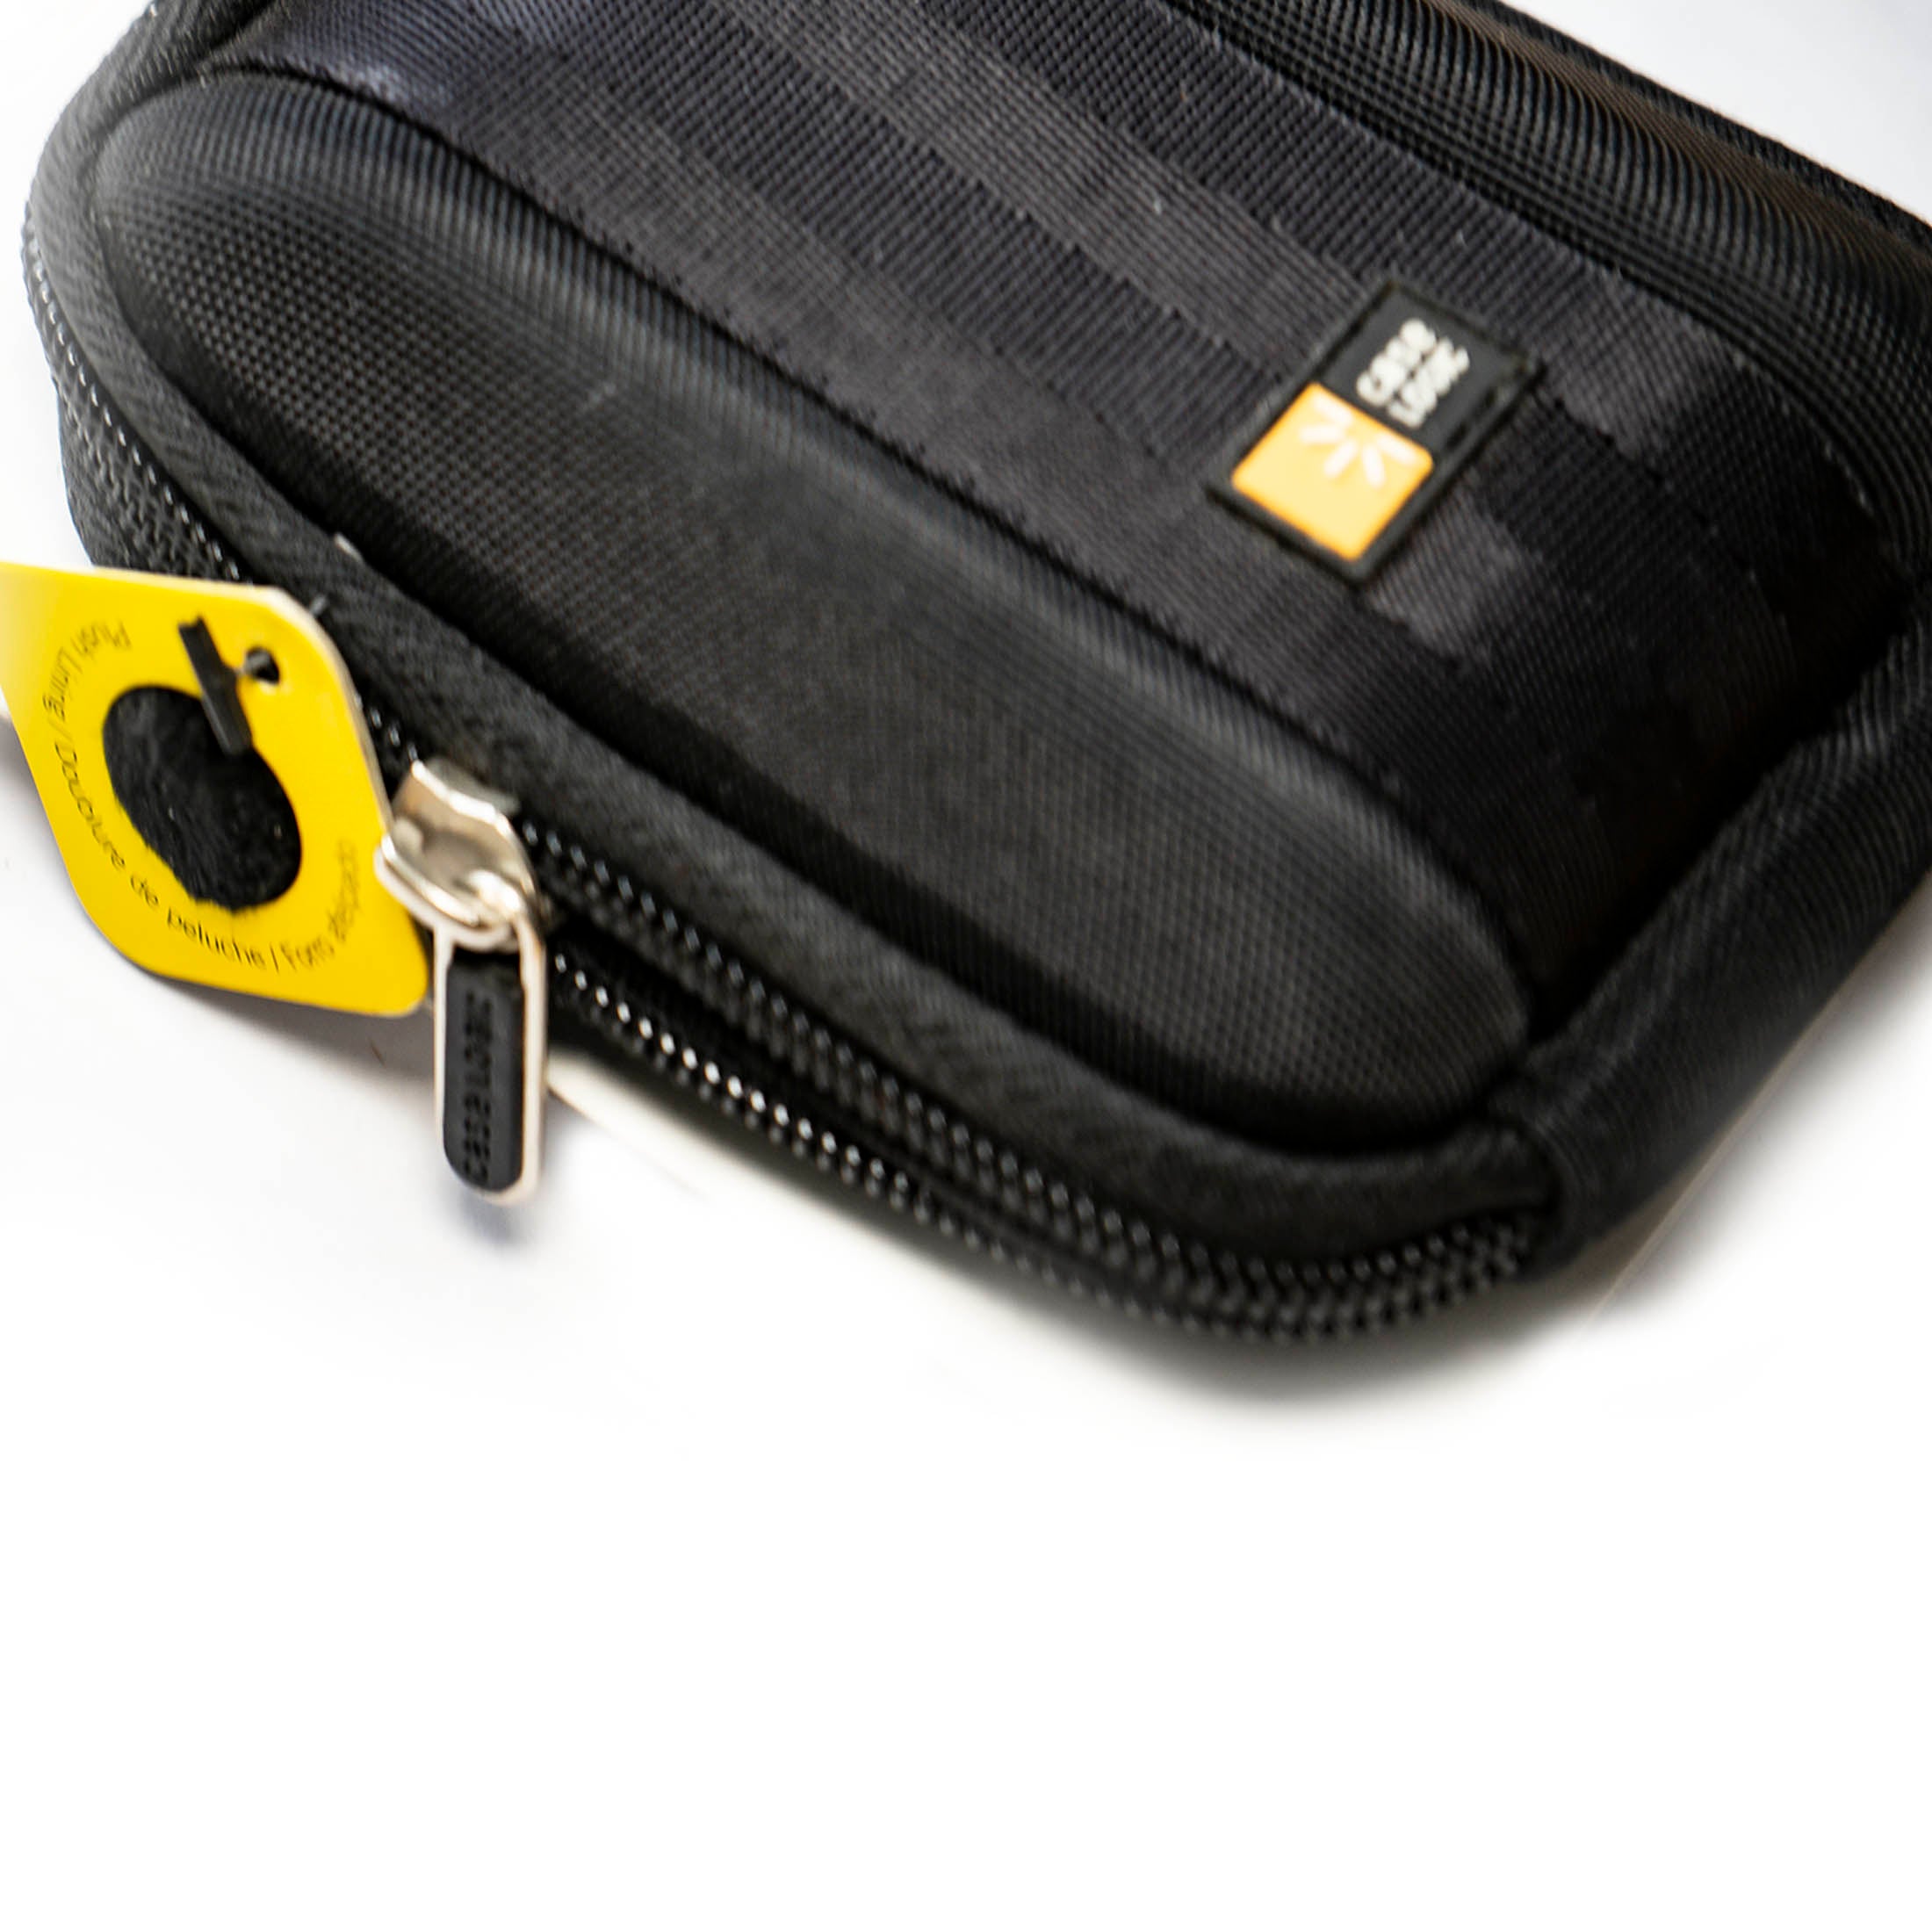 Case Logic  Small Multi Purpose hard case Pocket Bag (BLACK)